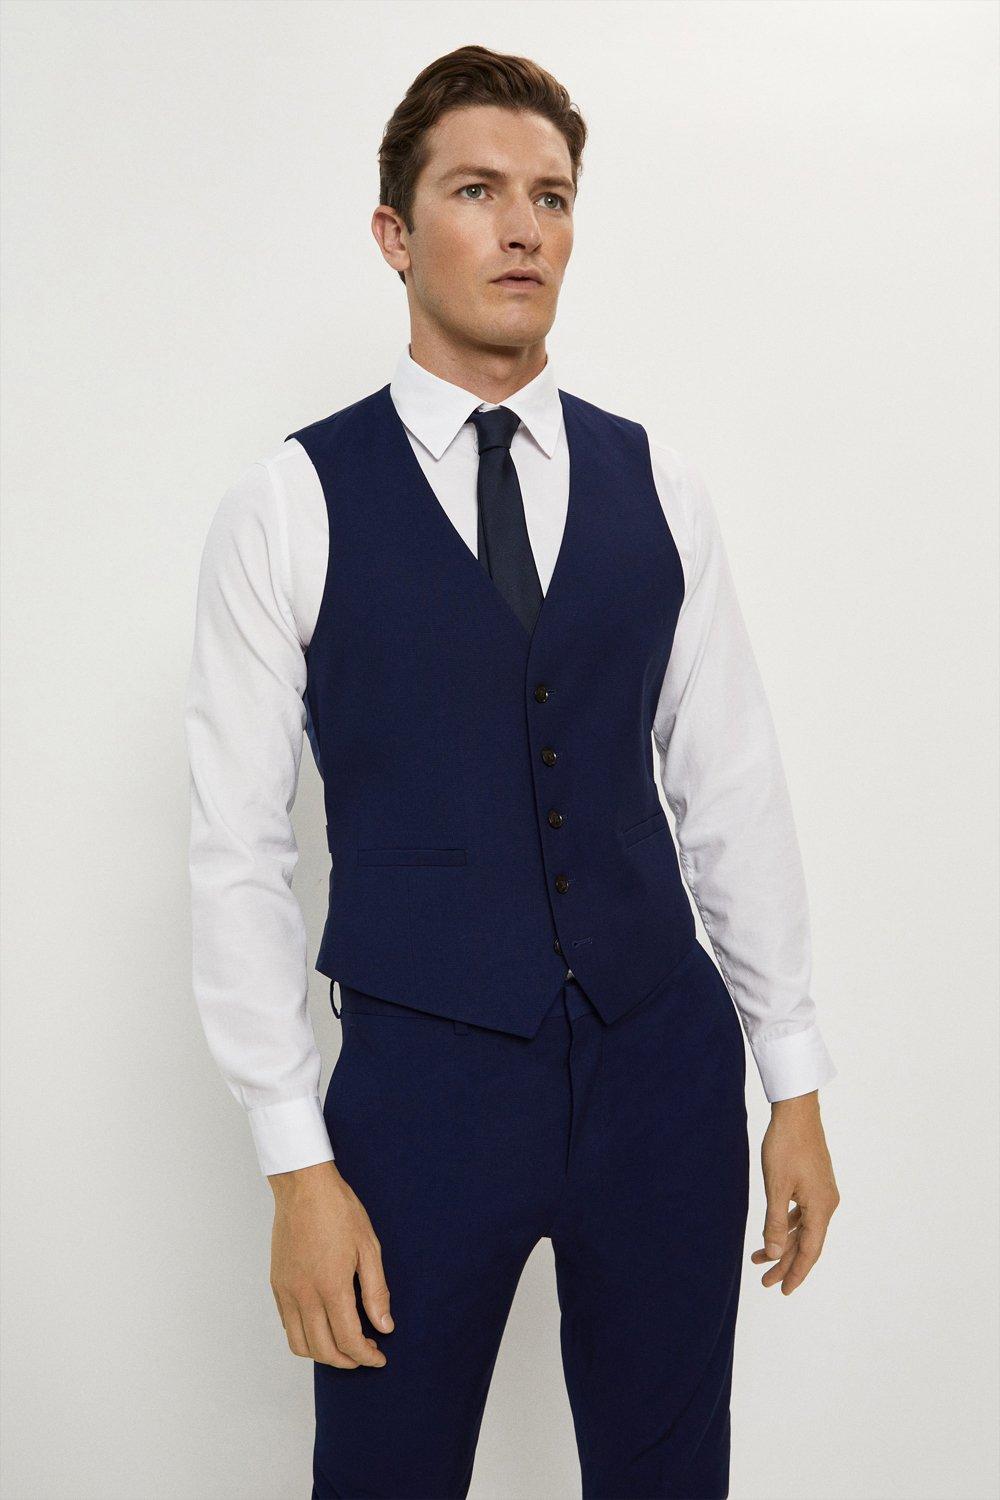 Suits | Skinny Fit Navy Textured Suit Waistcoat | Burton